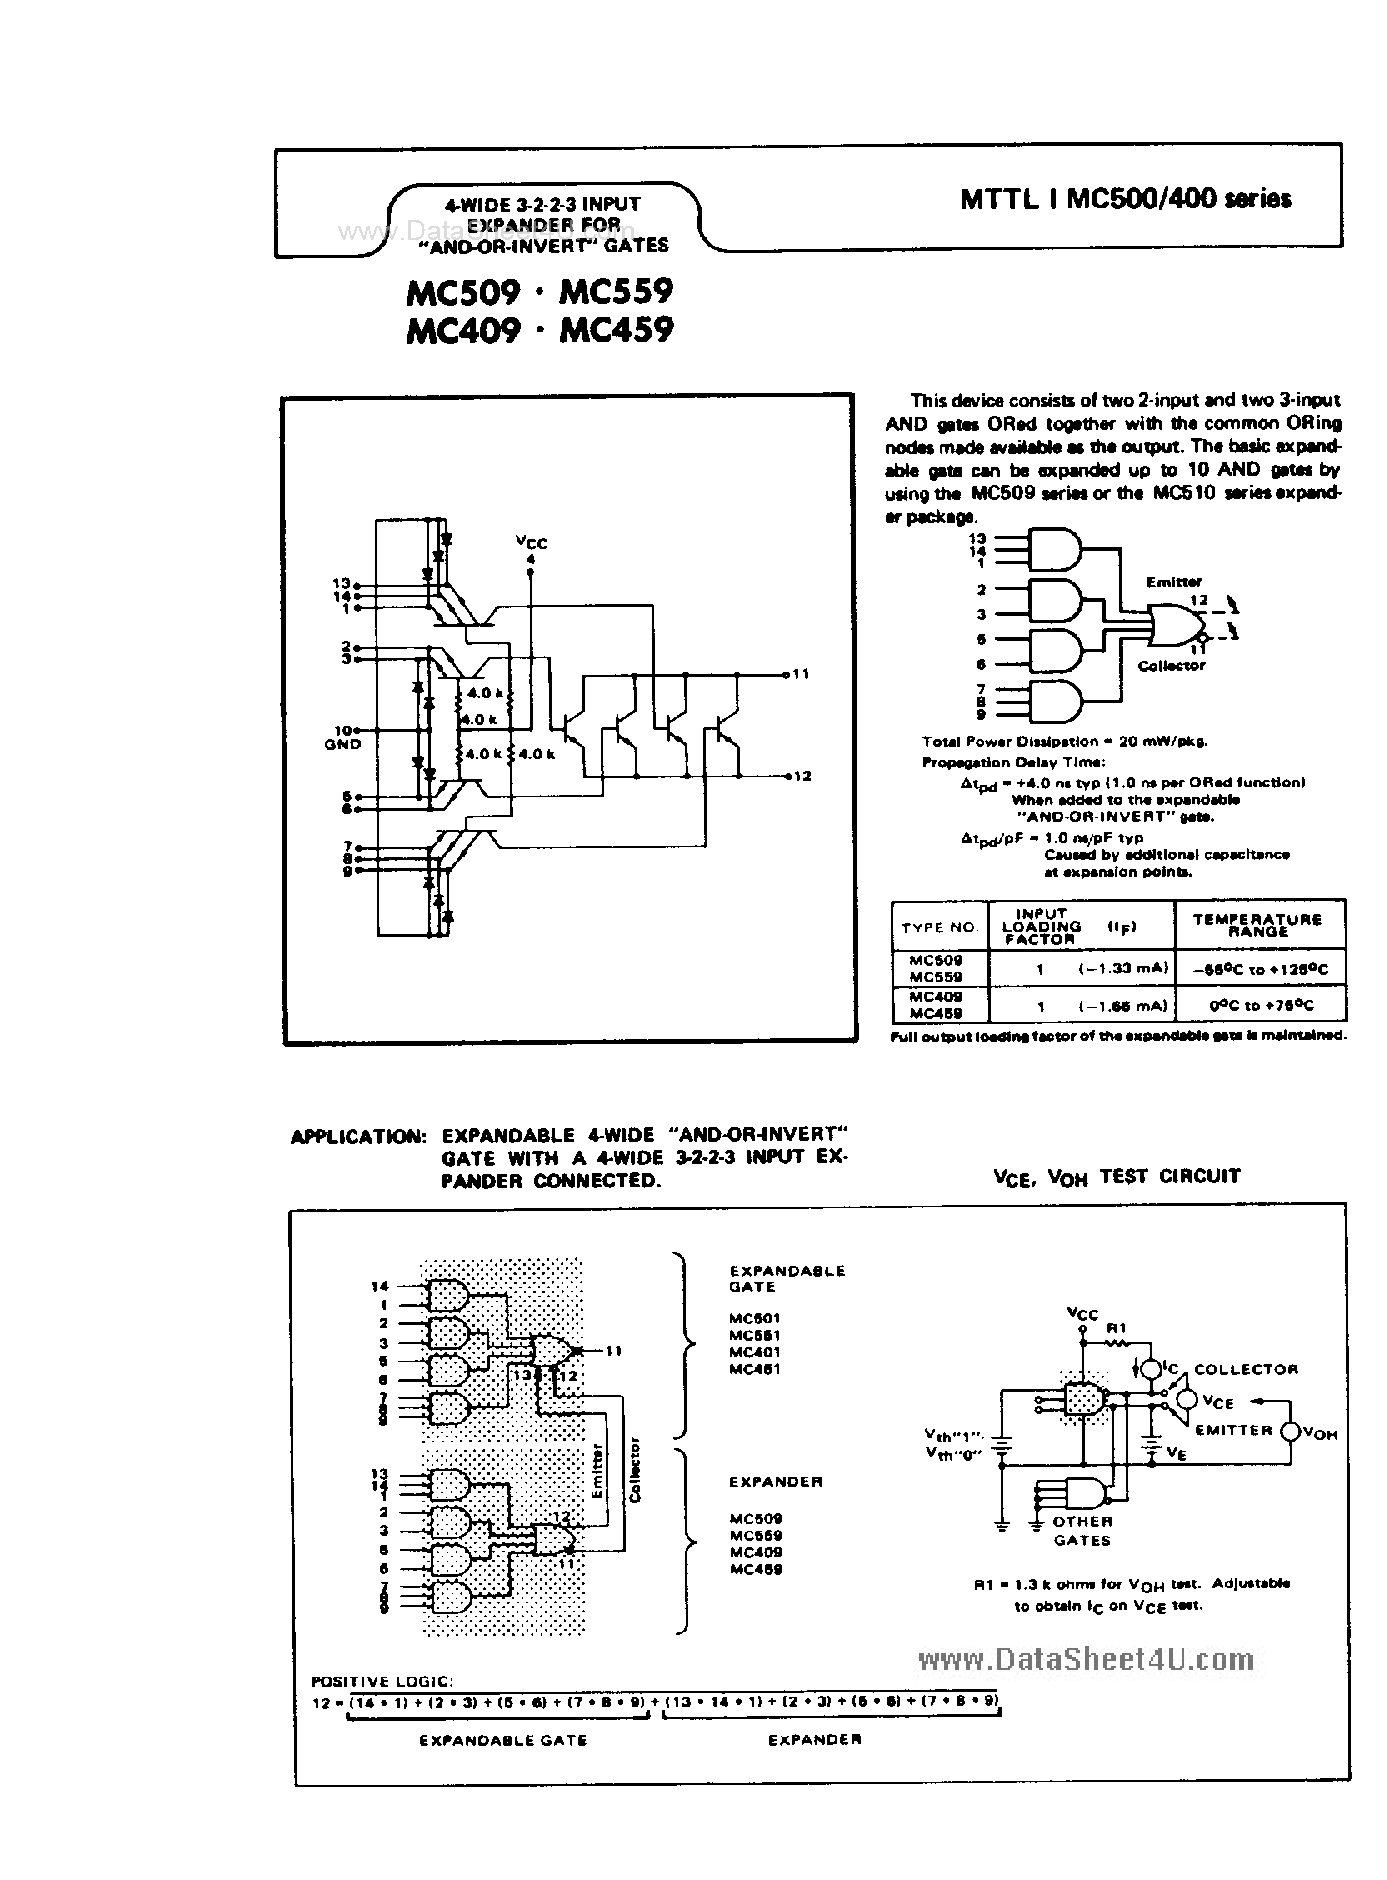 Datasheet MC509 - (MC509 / MC559) 4 wide 3-2-2-3 input expander page 1